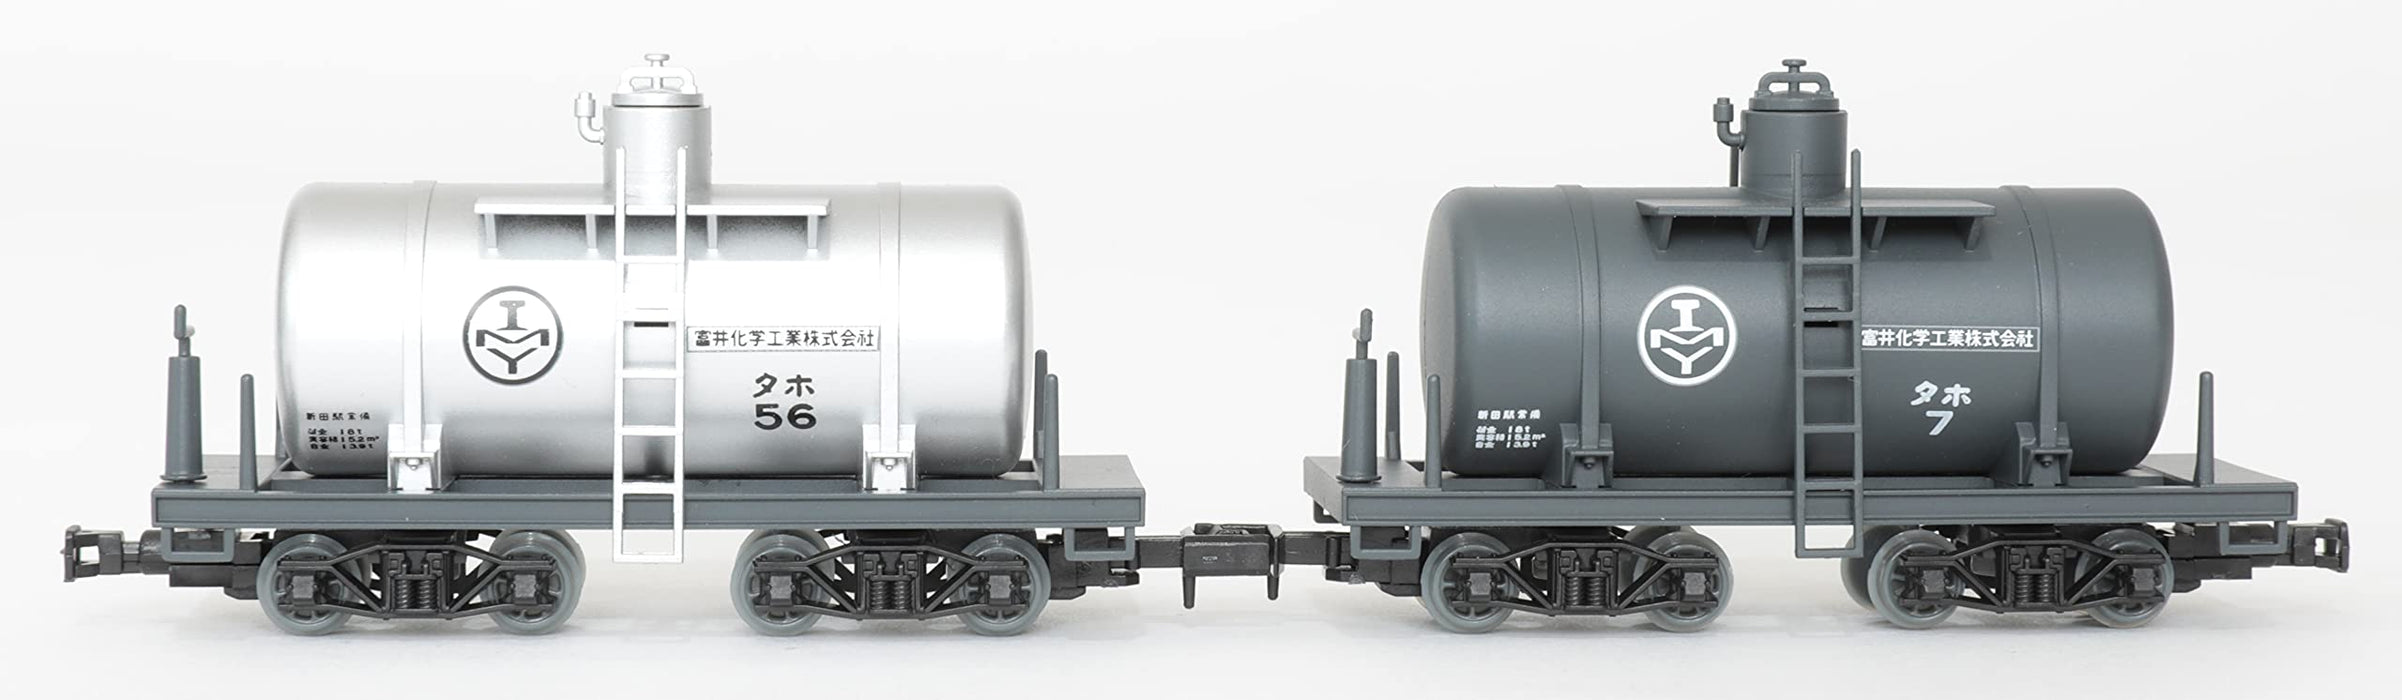 Tomytec Railway Collection Nekoya Line Small Tank Wagon 2-Car Set Limited Production Diorama Supplies